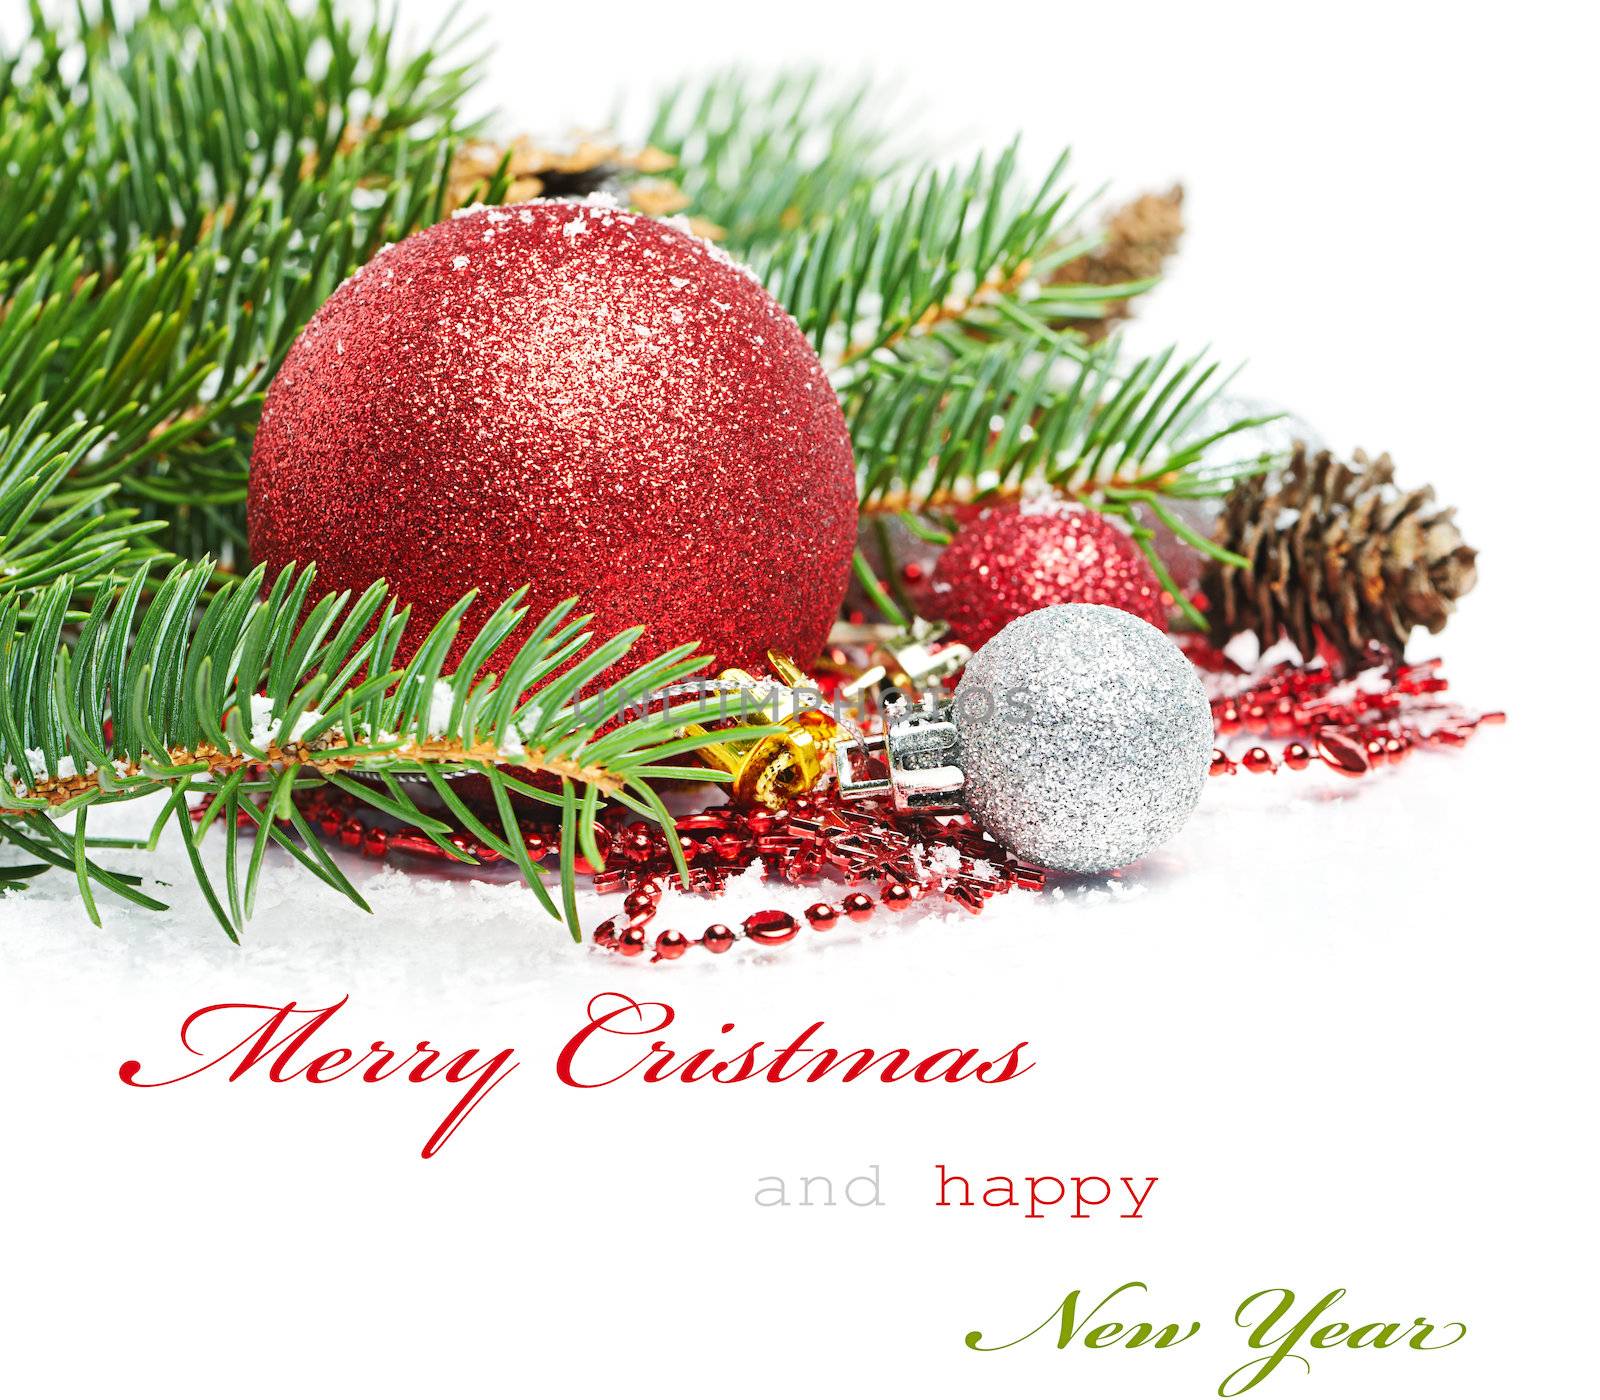 Christmas greetings card by Olinkau